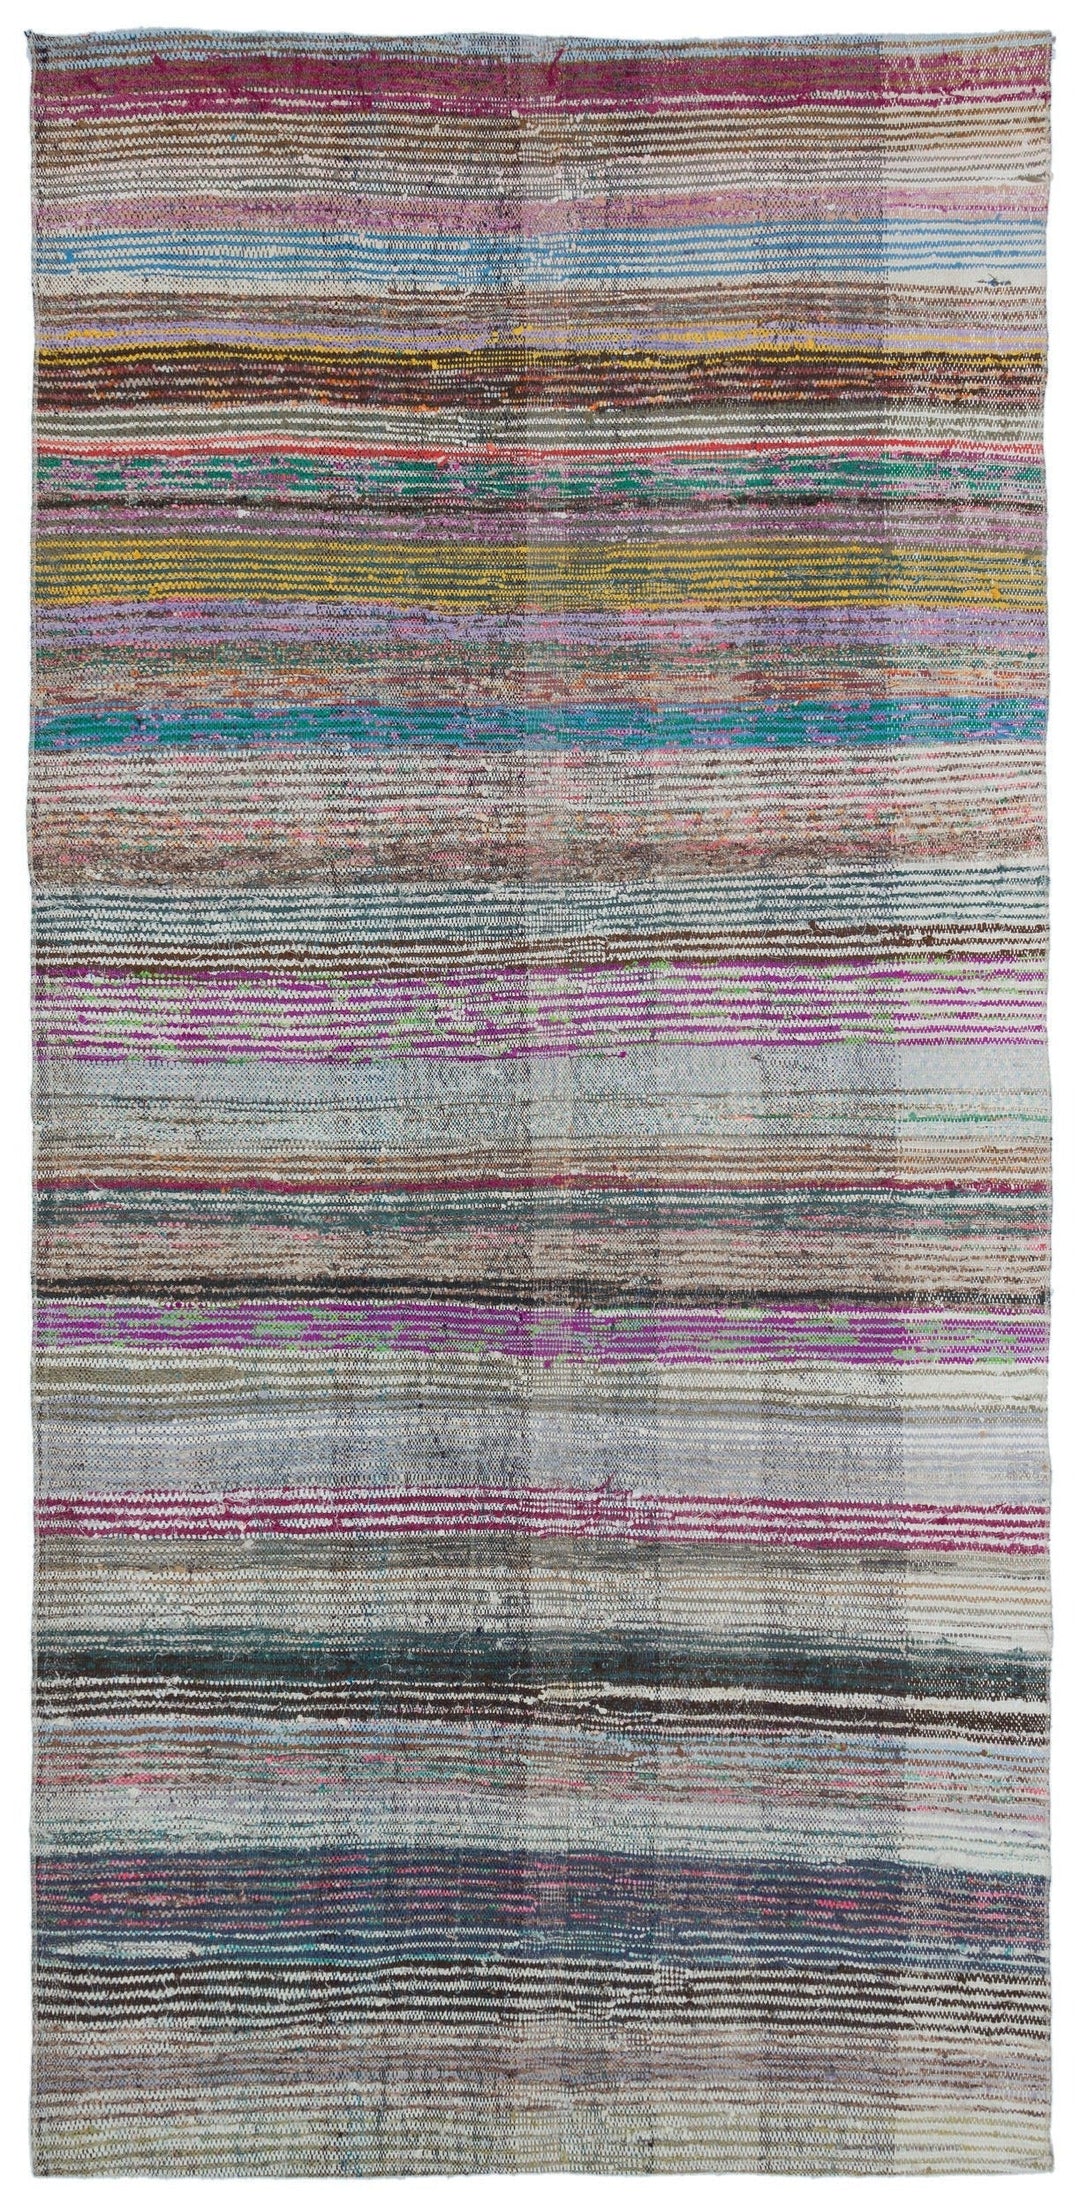 Cretan Beige Striped Wool Hand-Woven Carpet 136 x 284